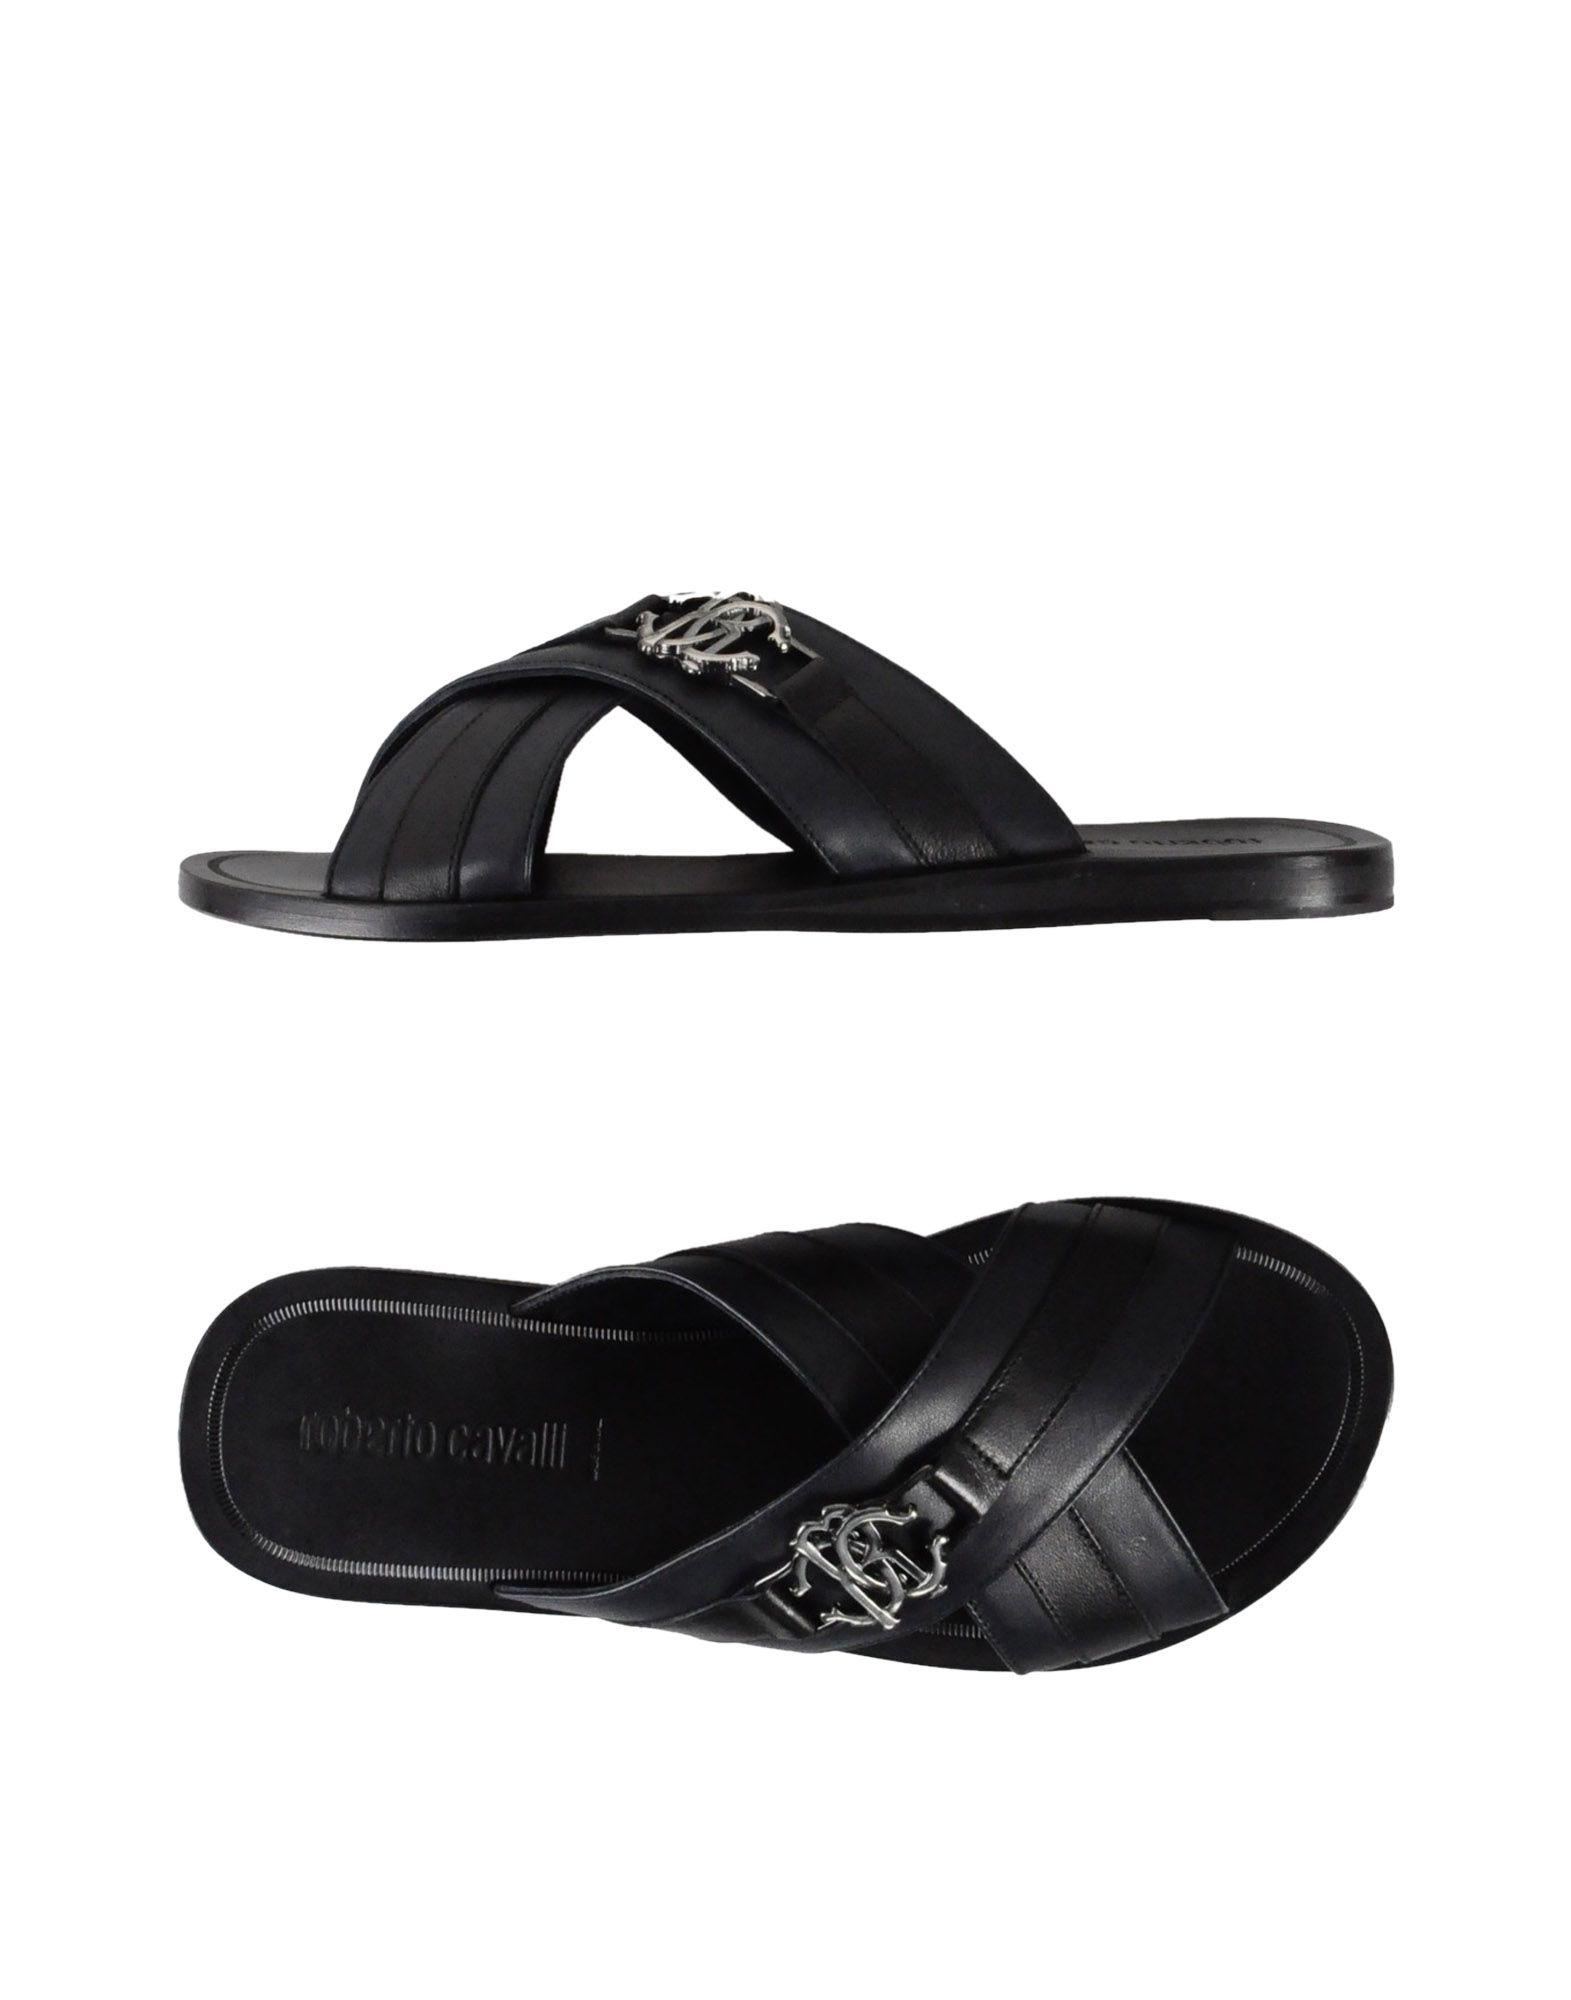 Roberto Cavalli Leather Sandals in Black for Men - Lyst